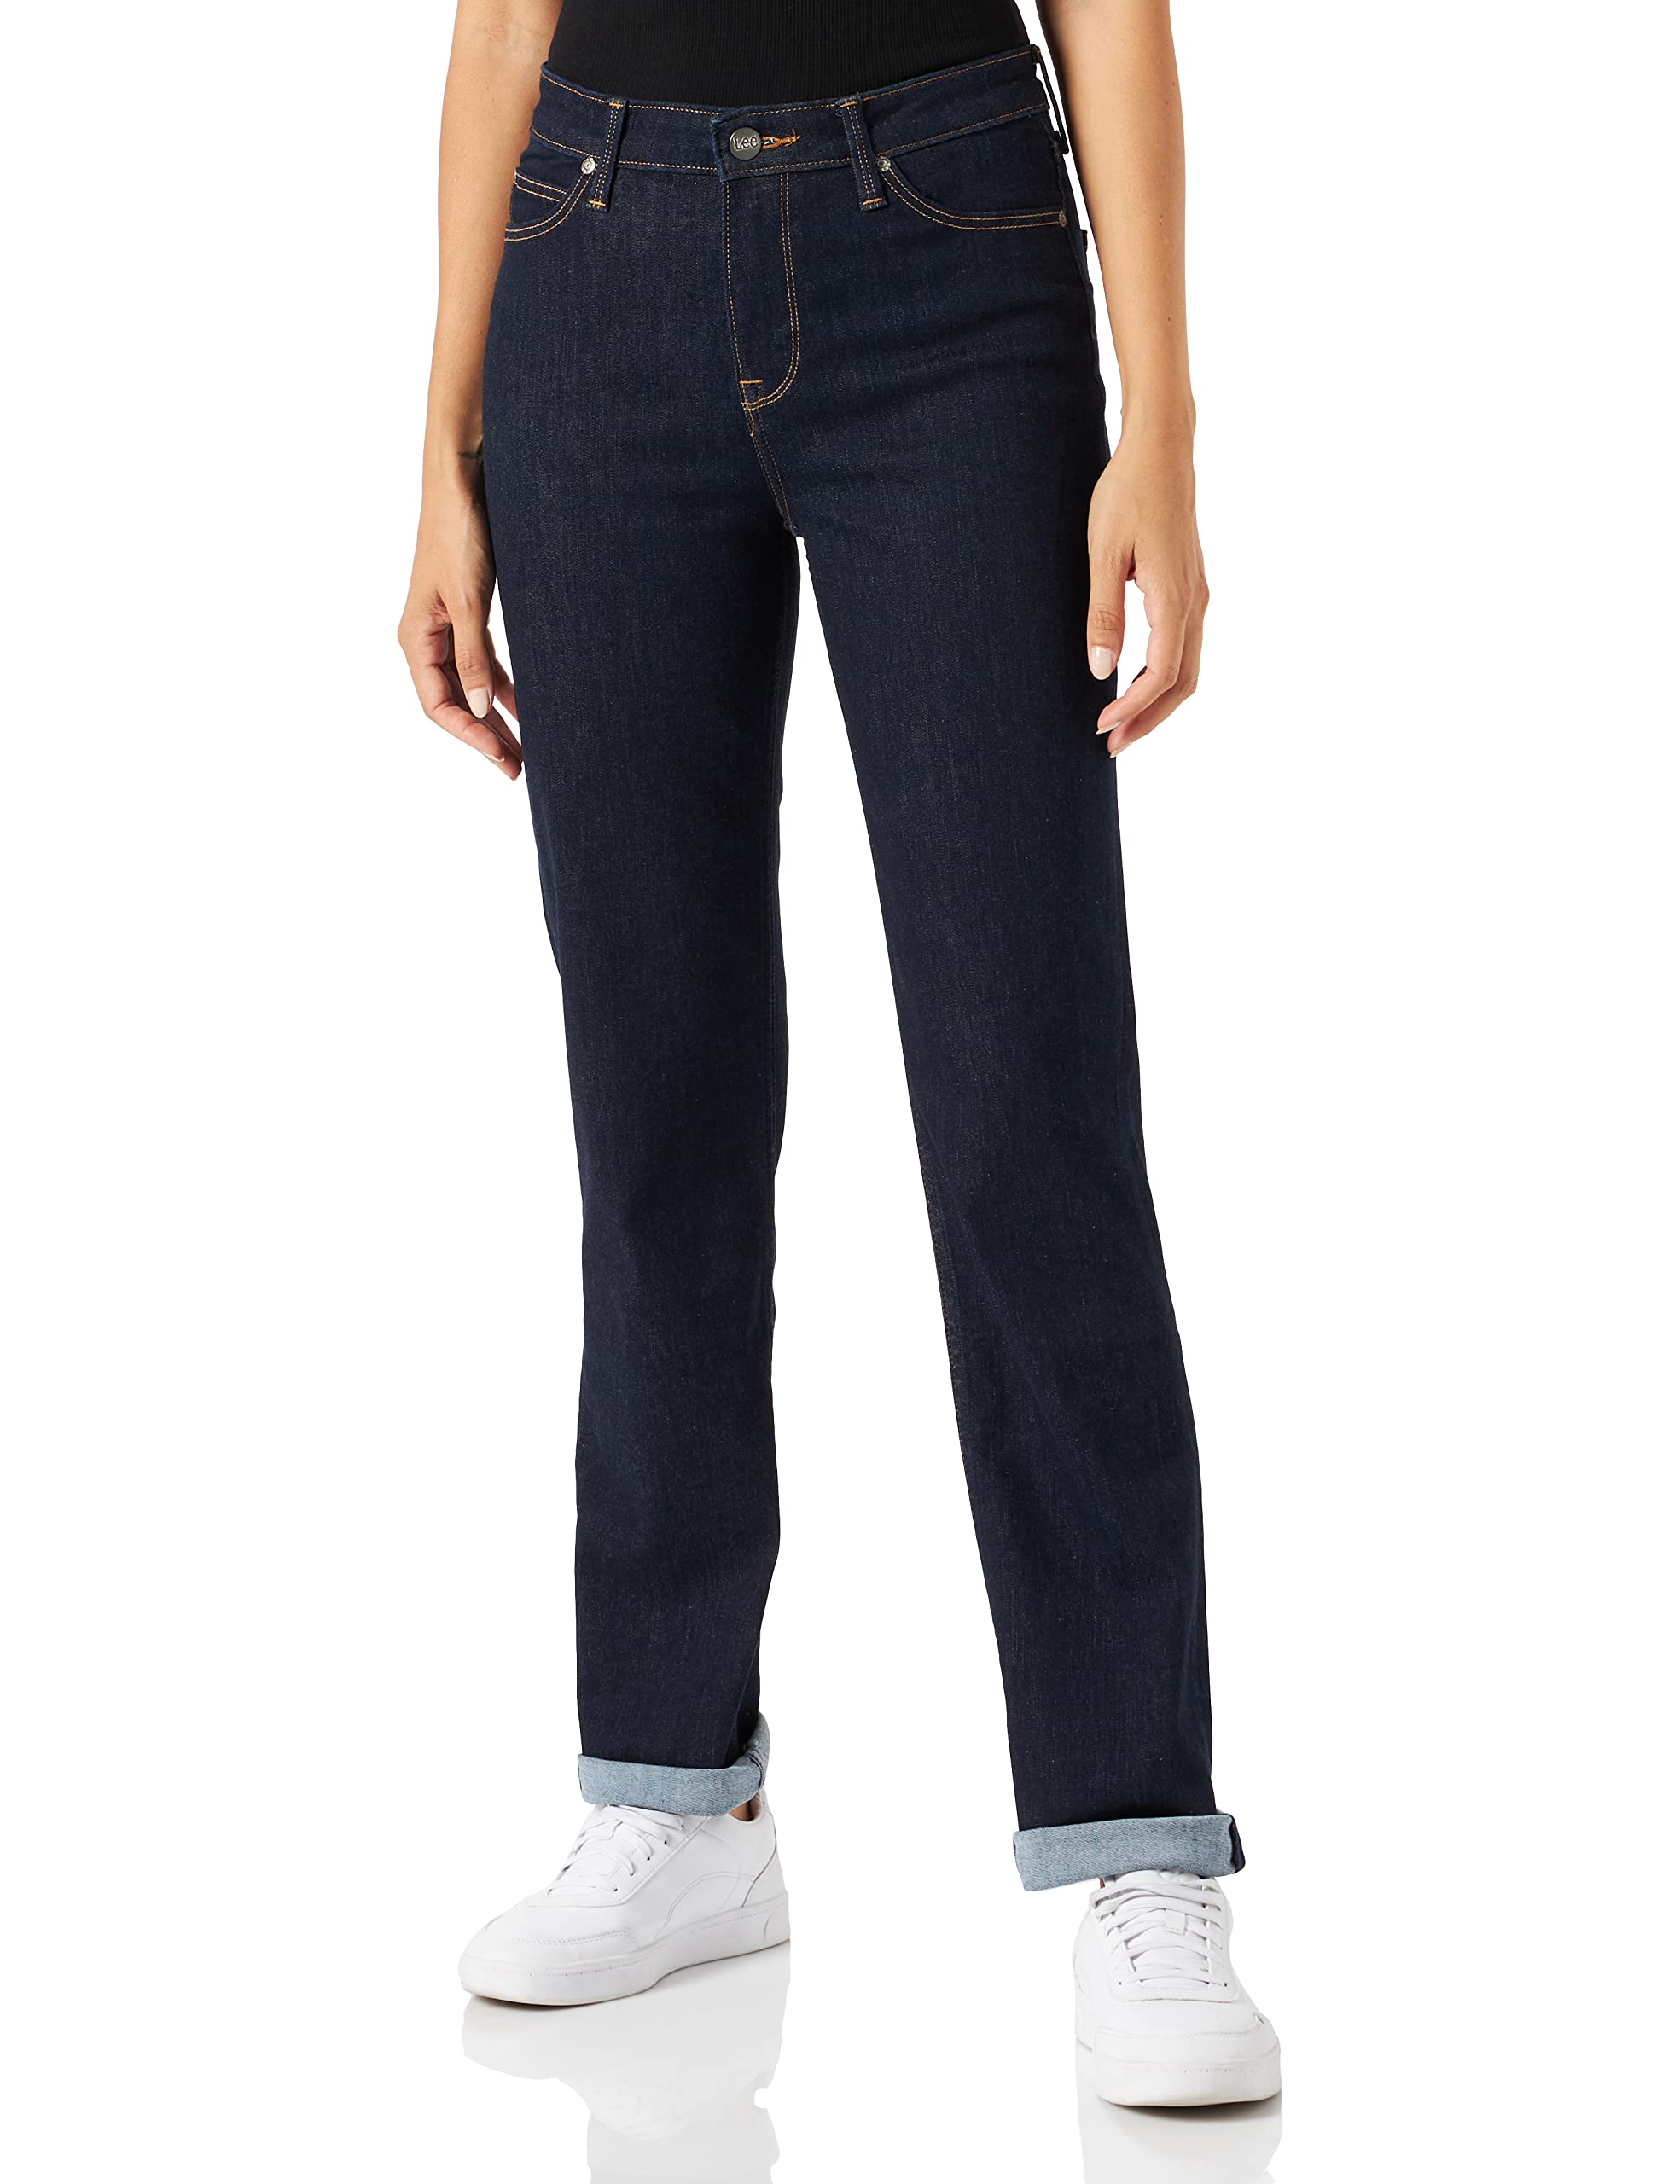 Lee Damen Marion Straight Jeans, Rinse (Frfh), 27W / 31L